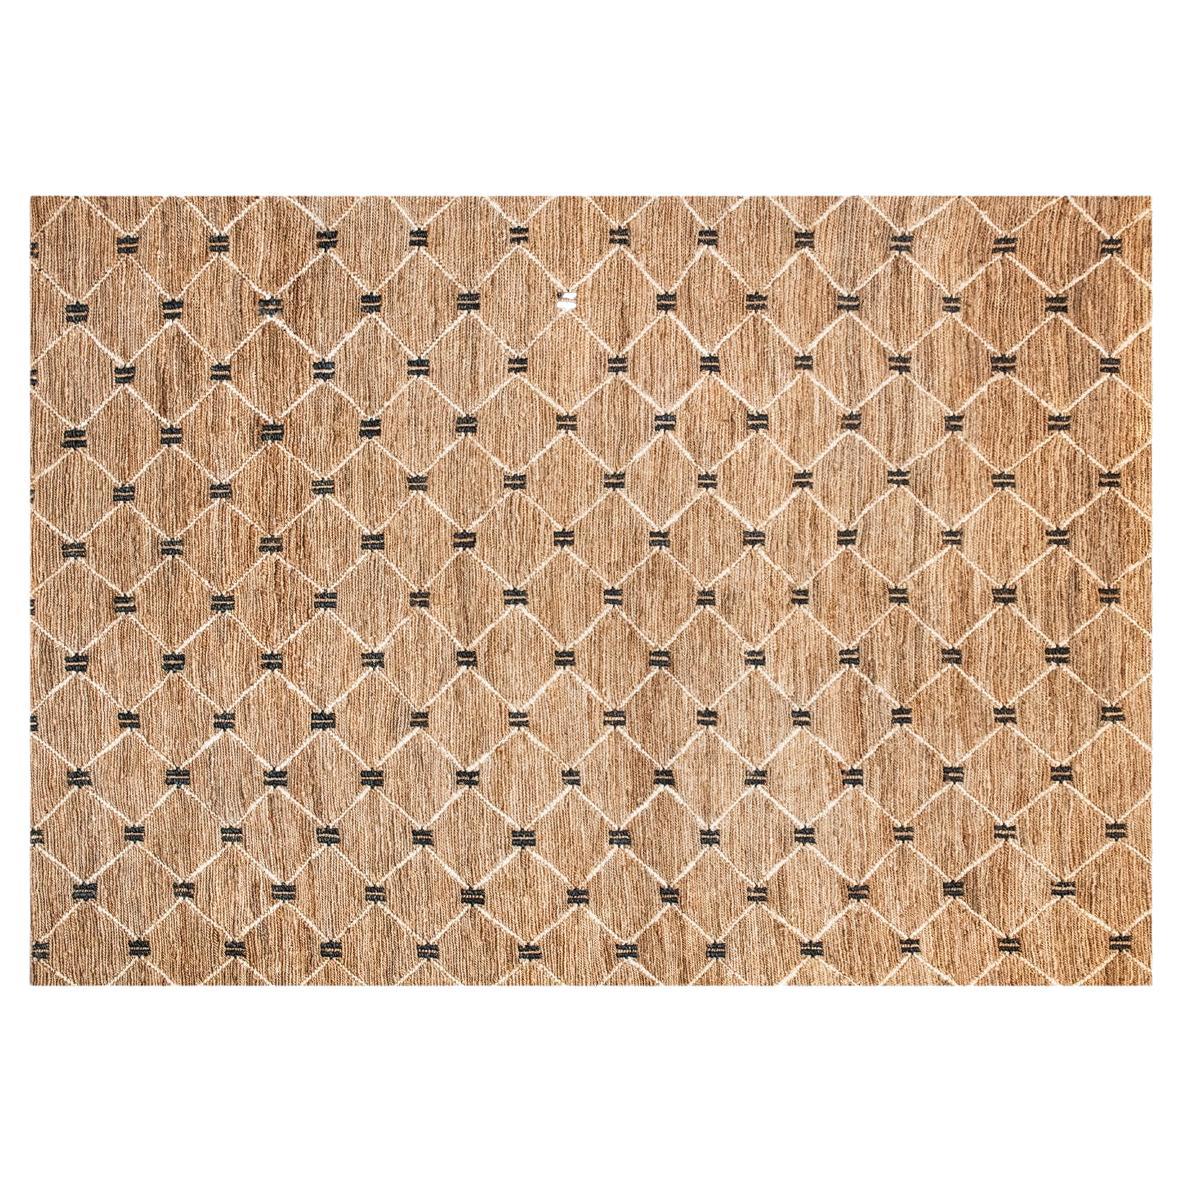 Modern Handwoven Jute Carpet Rug by Kilombo Home Natural Colors Diamonds For Sale